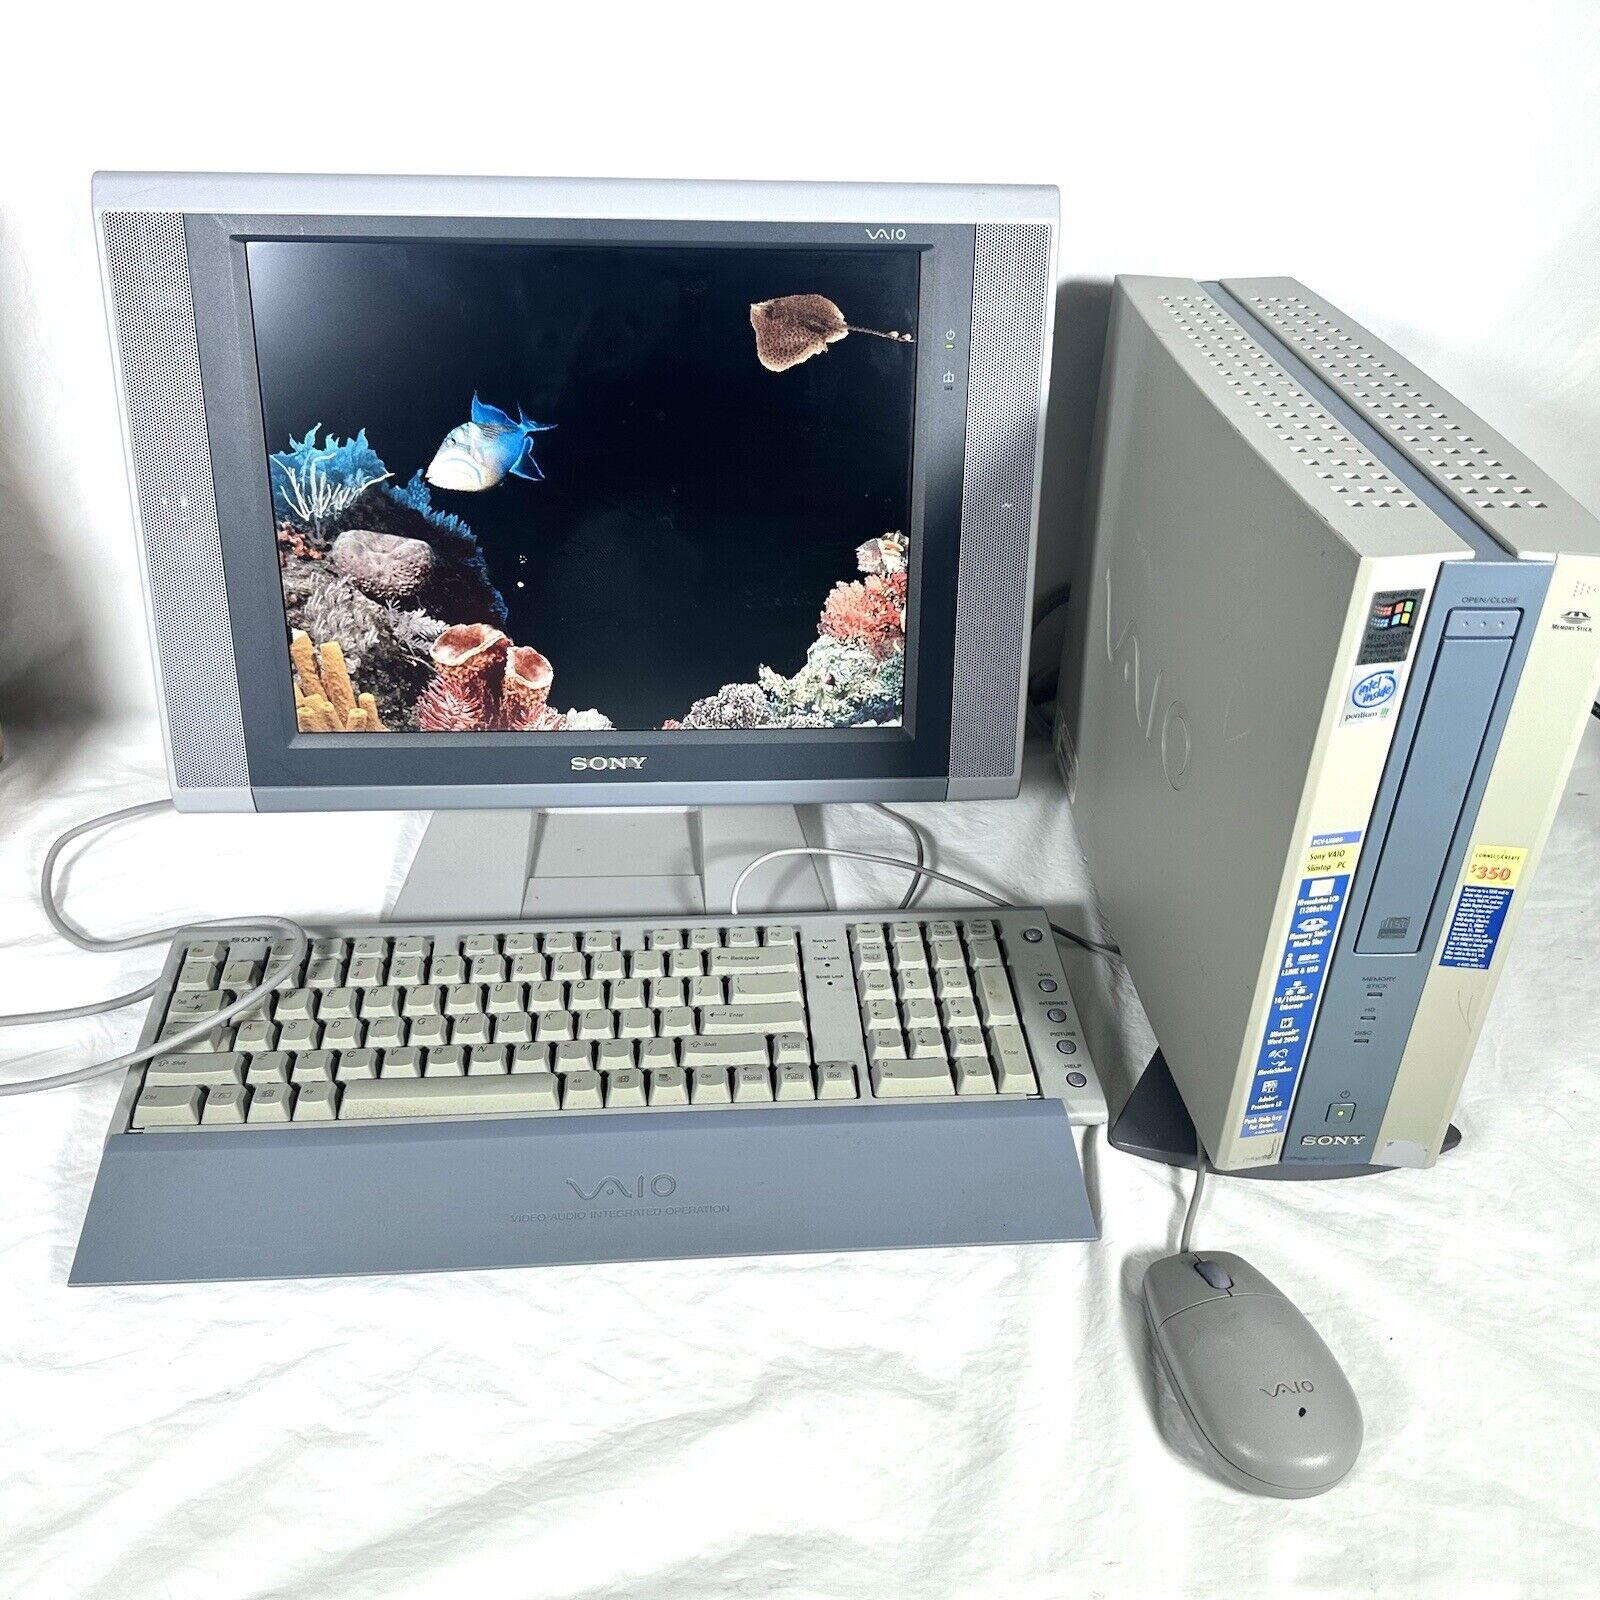 SONY VAIO PCV-LX800 Retro PC  Desktop Computer Pentium iii Complete Working